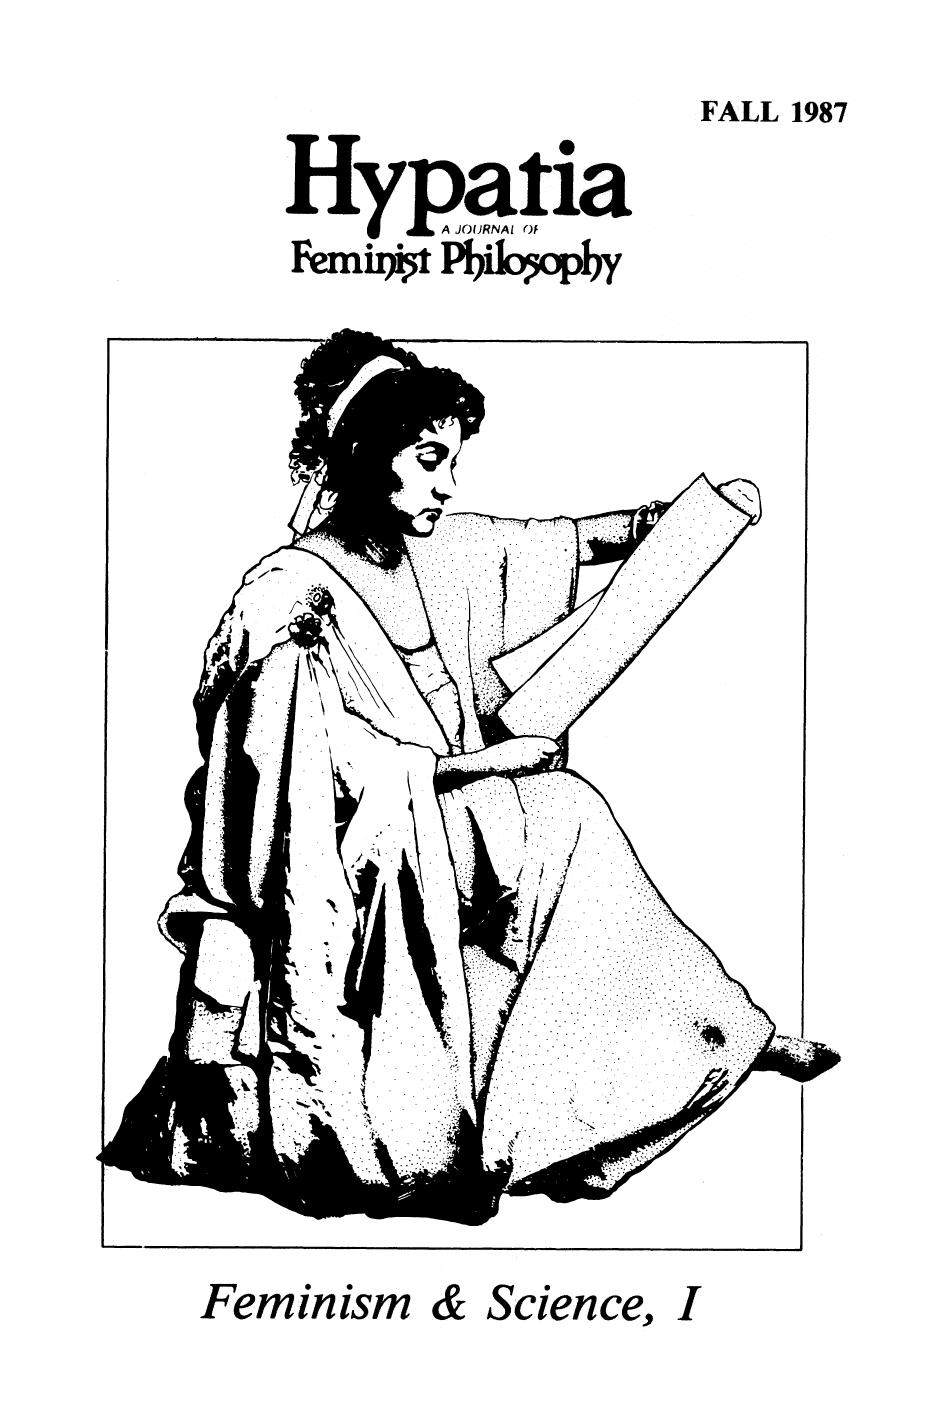 Hypatia A Journal of Feminist Philosophy, Vol. 2, No. 3